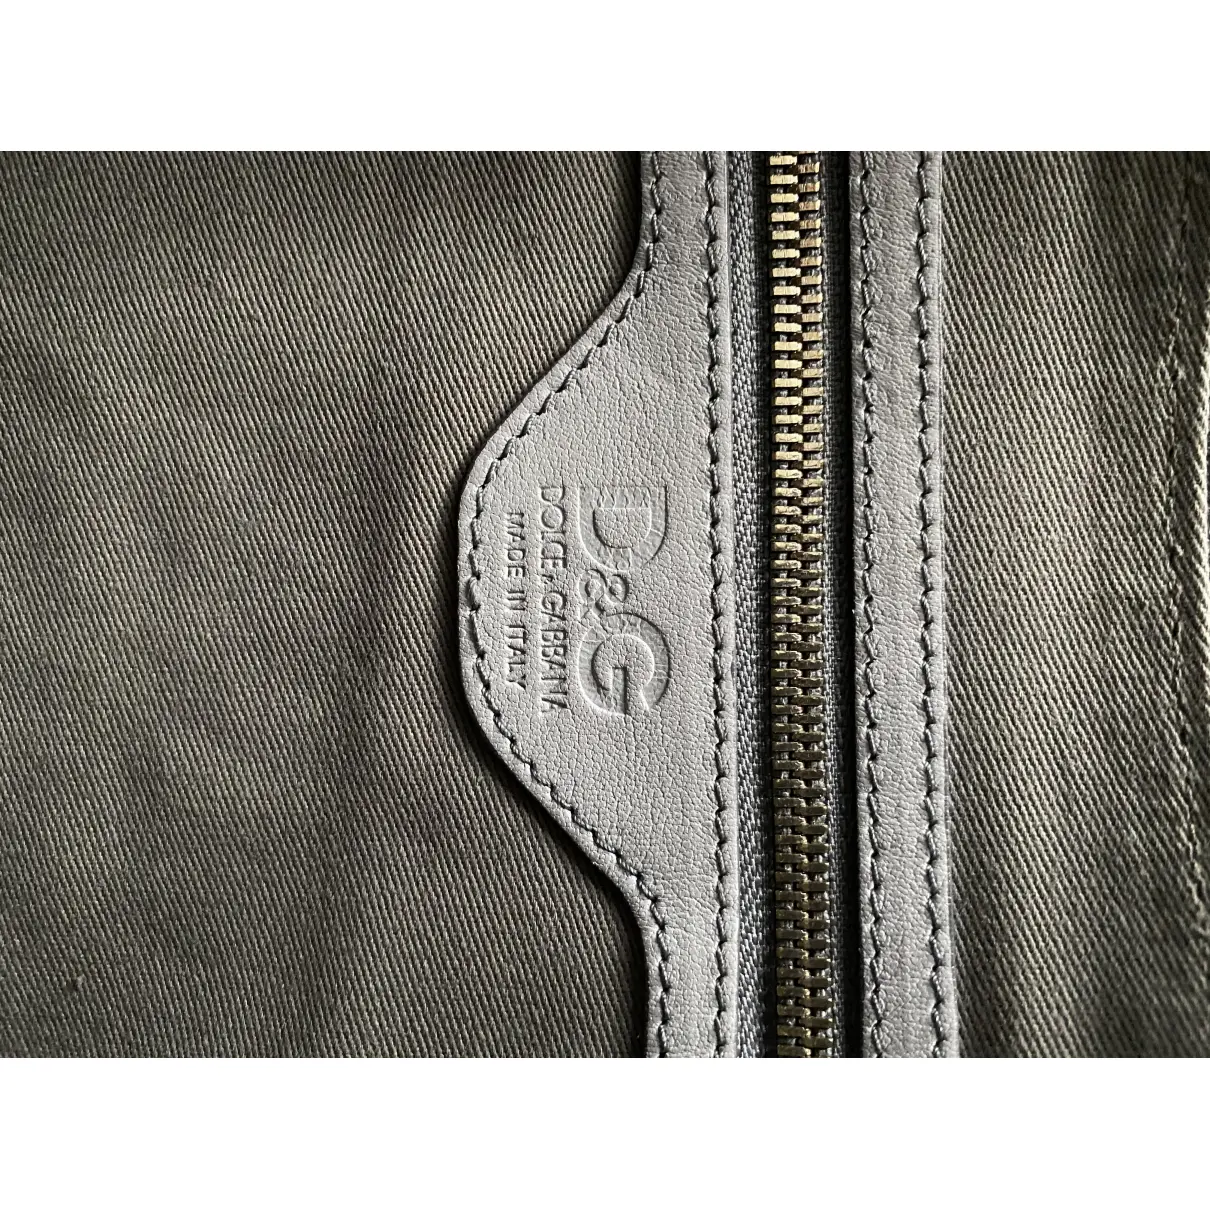 Leather clutch bag D&G